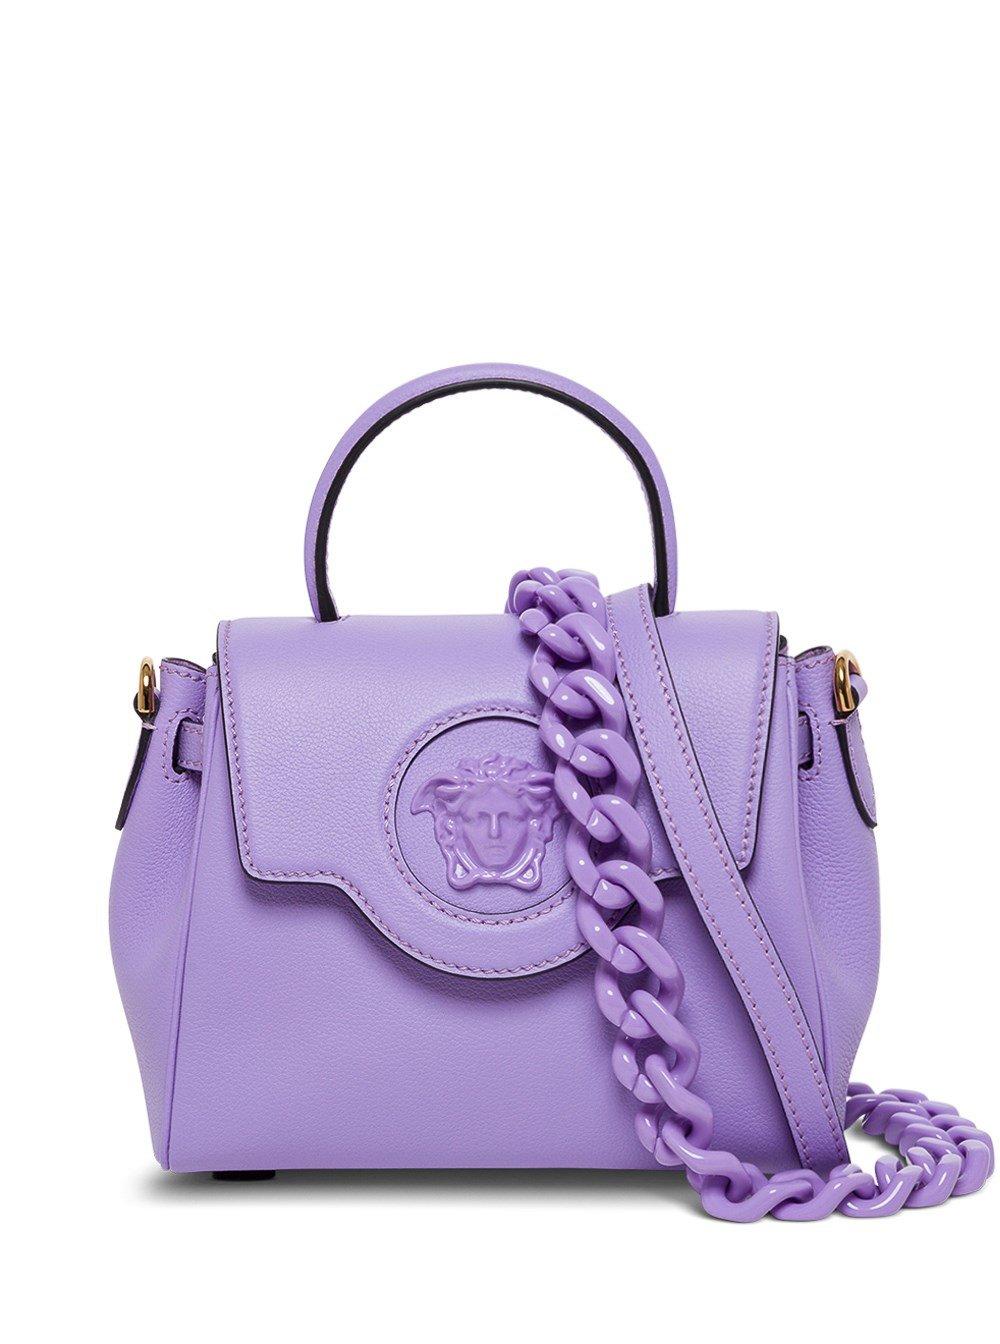 Versace La Medusa Handbag In Lilac Leather in Purple